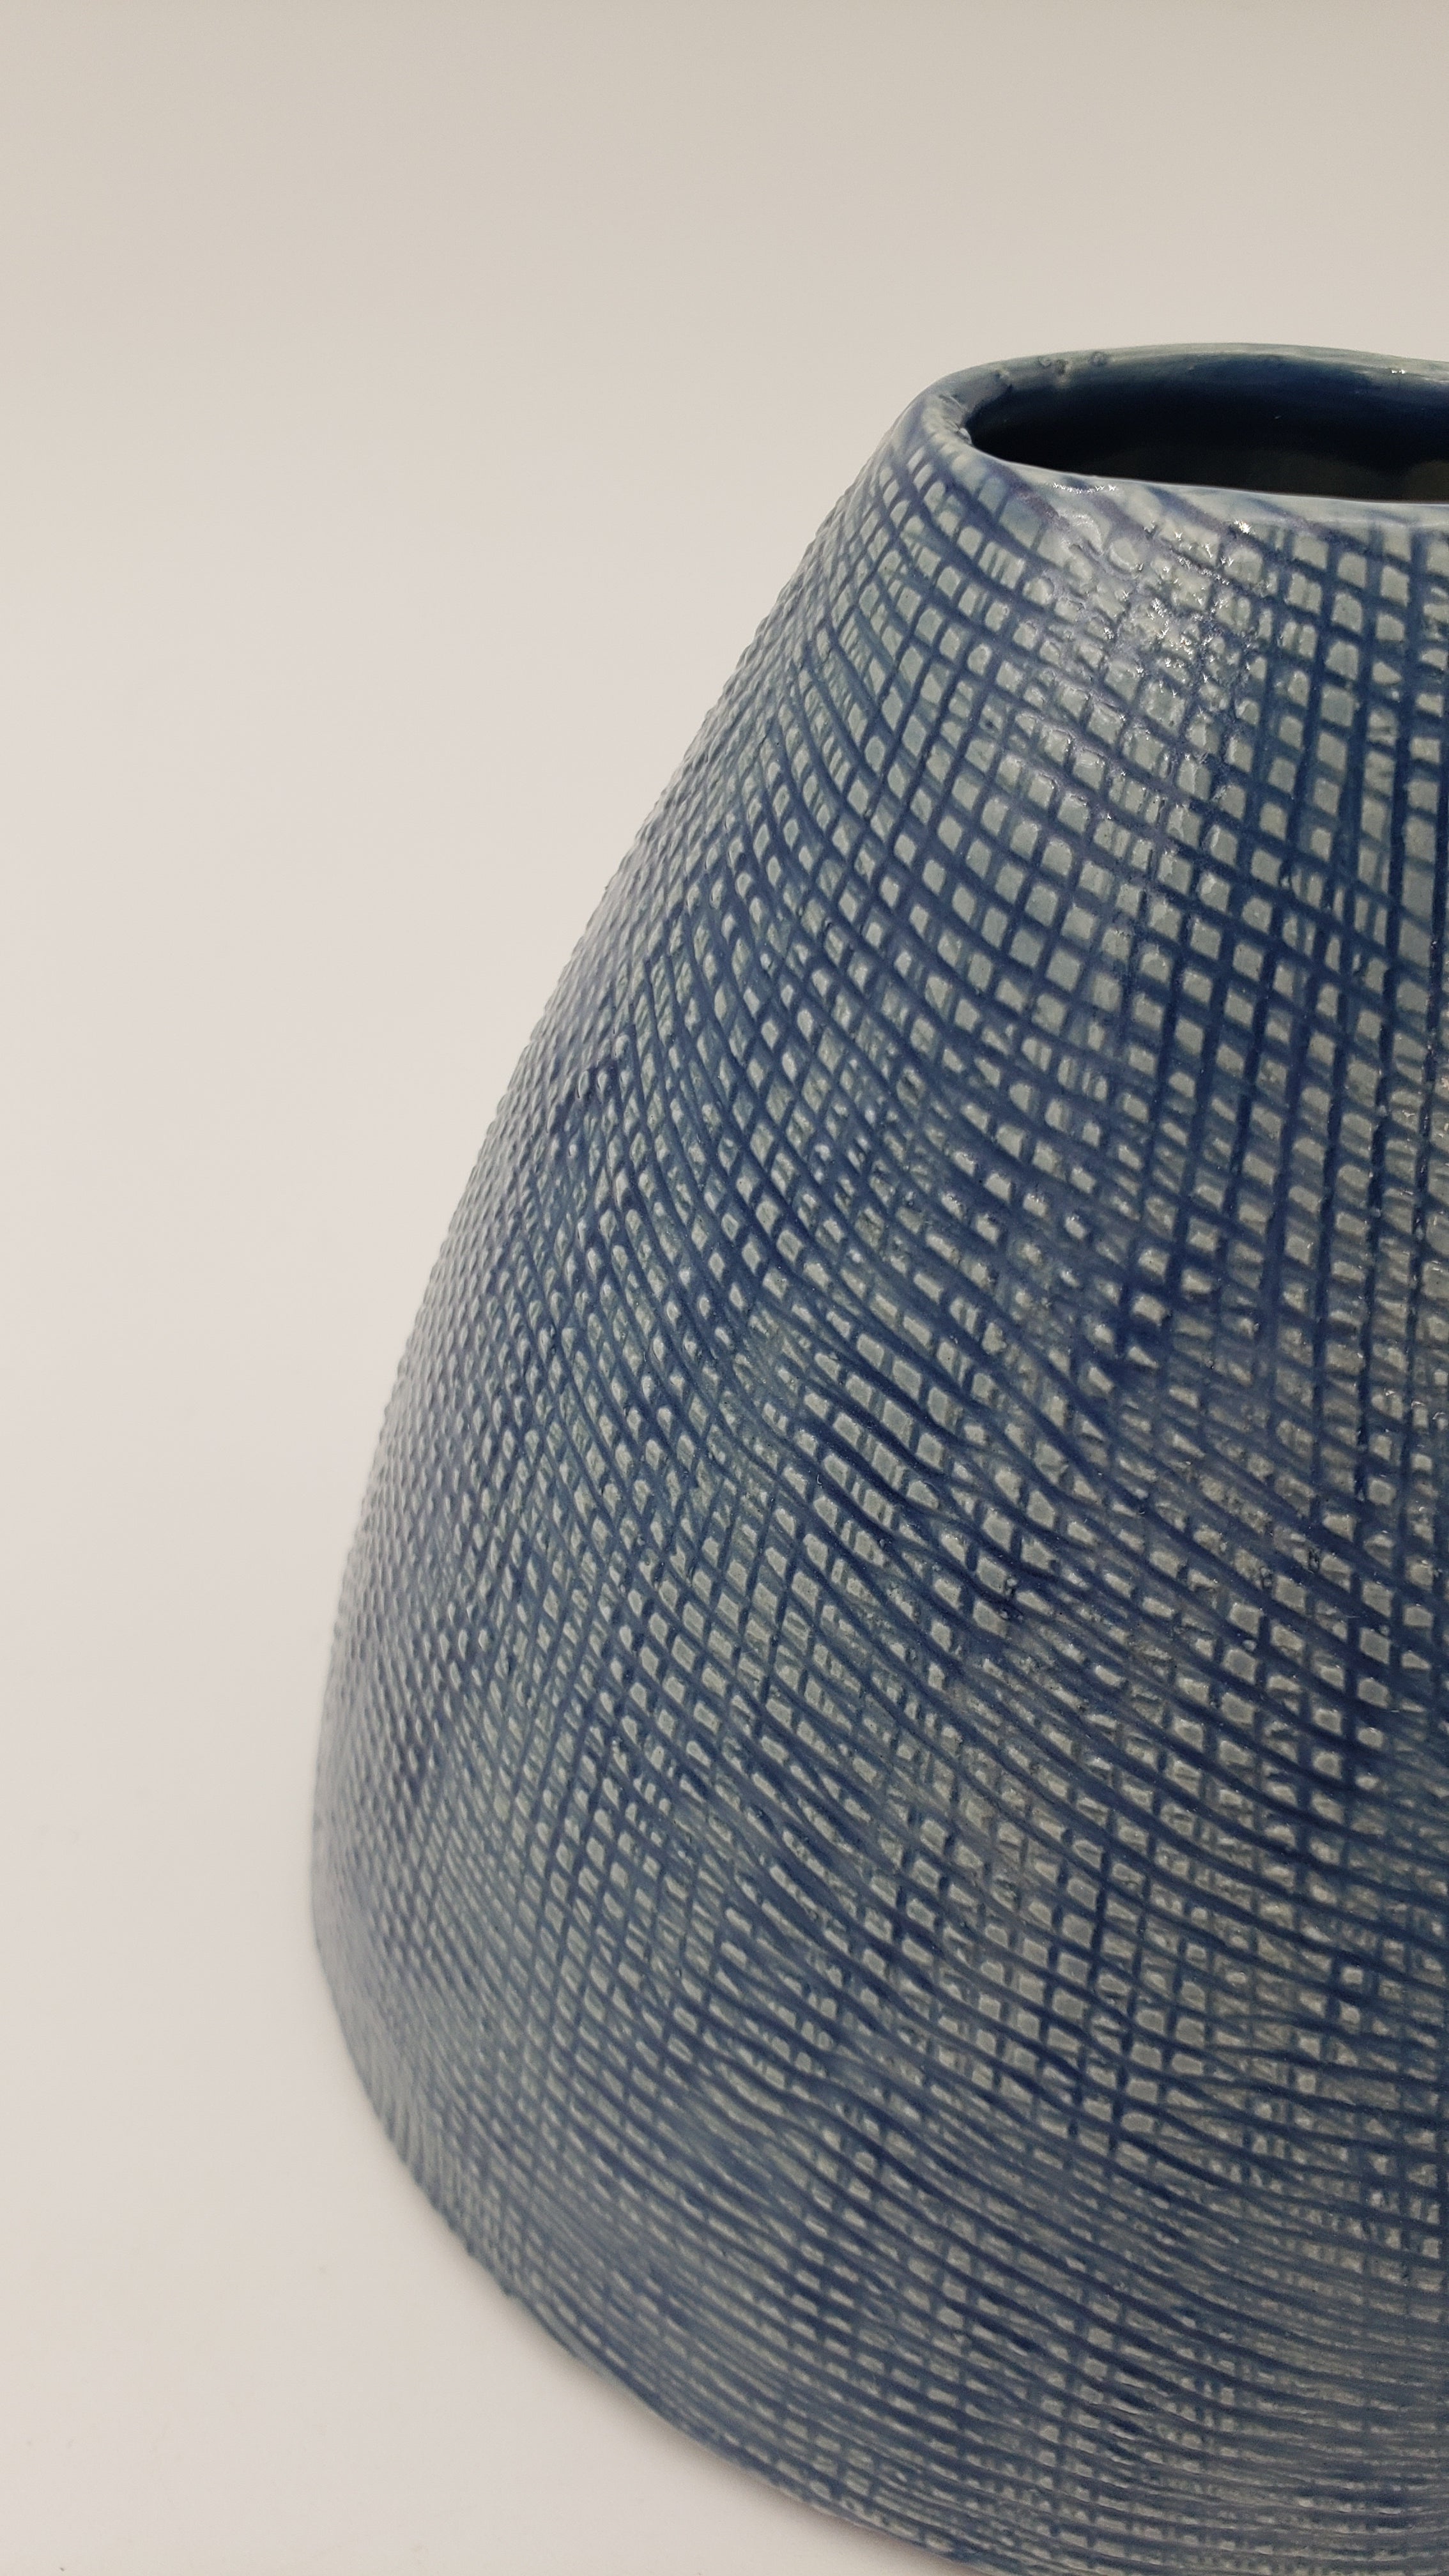 Textured glossy blue vase